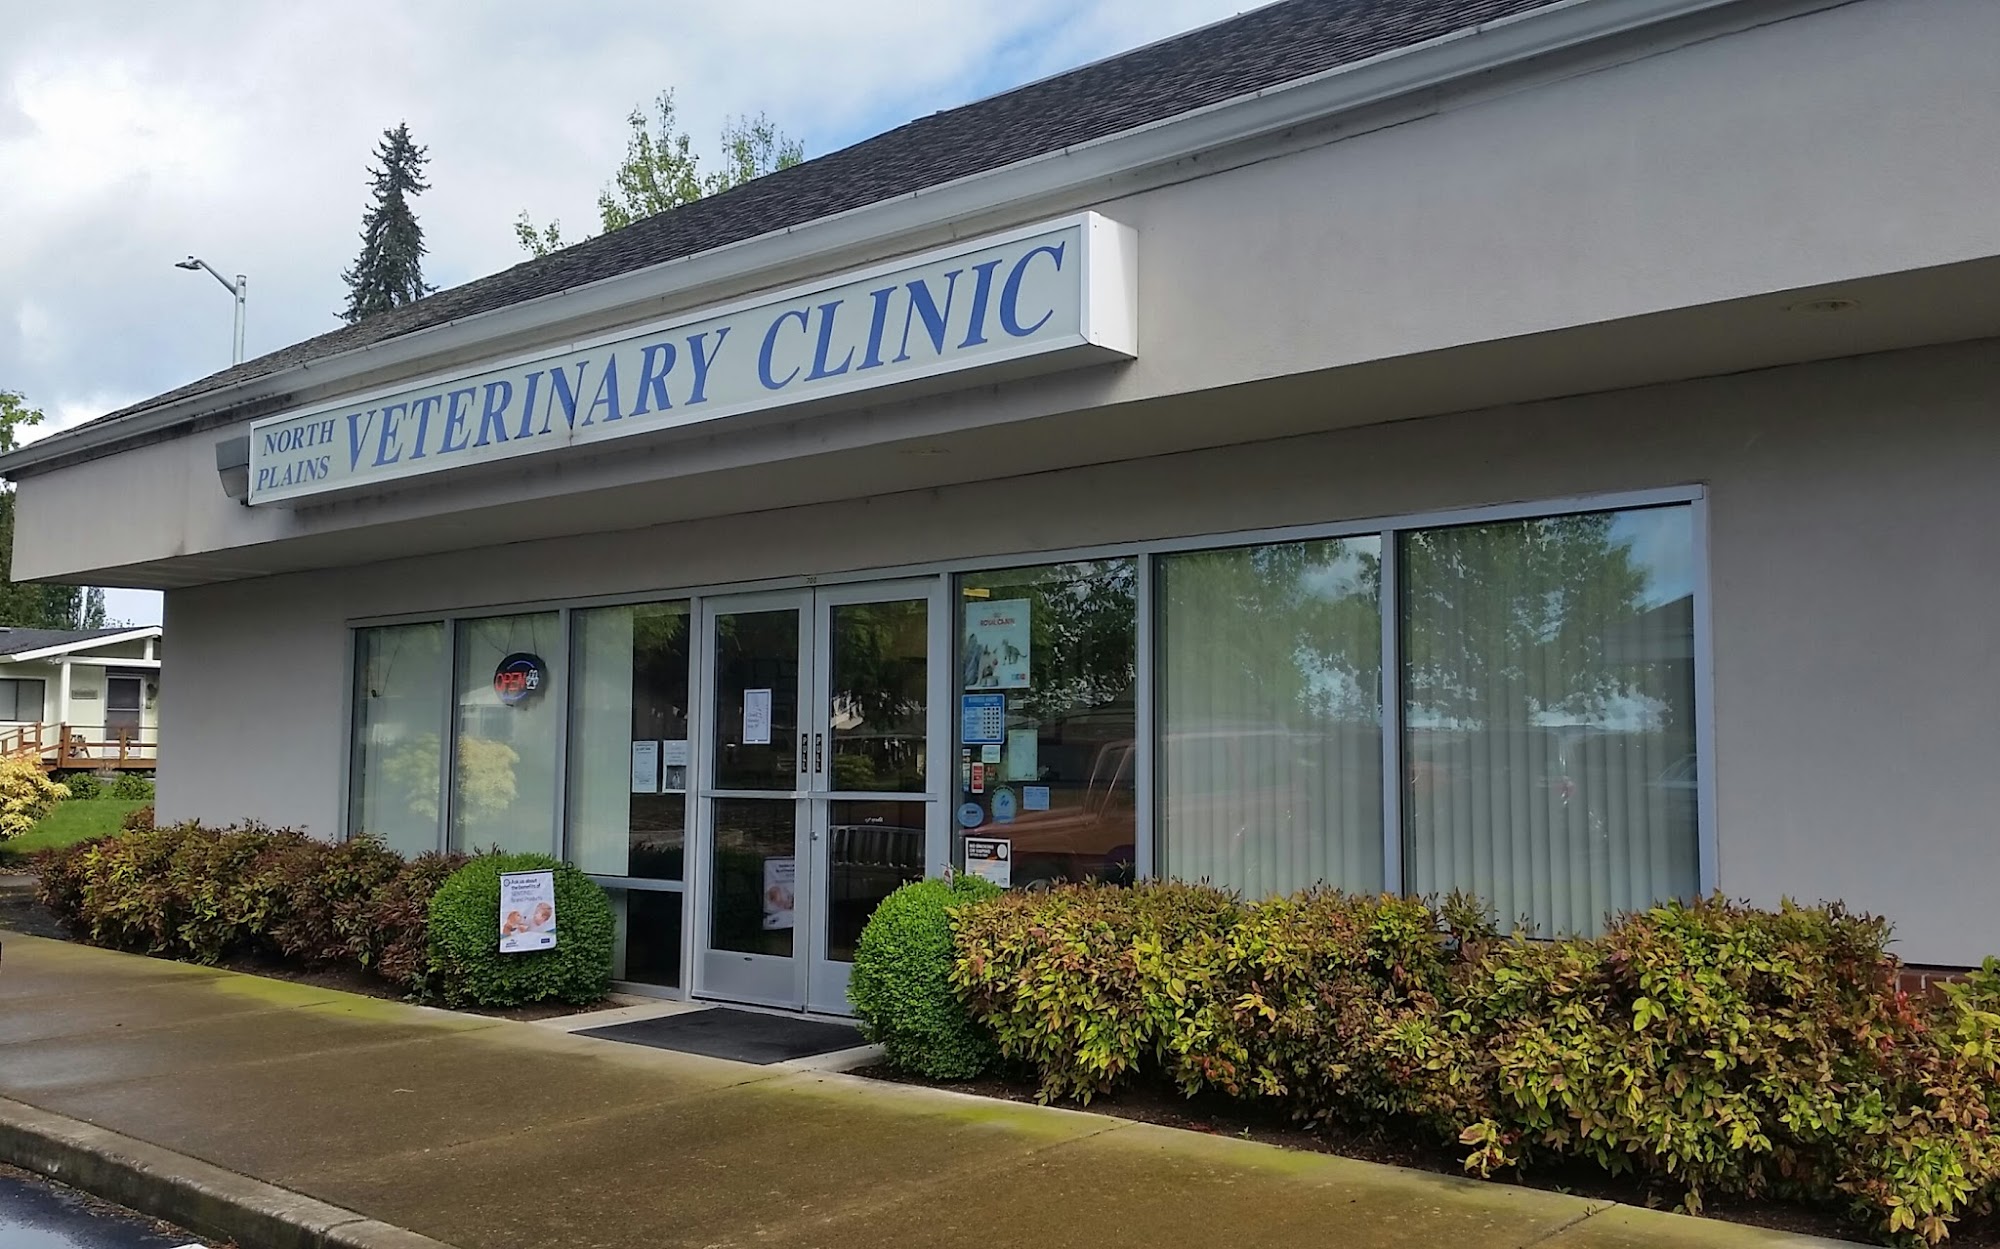 North Plains Veterinary Clinic